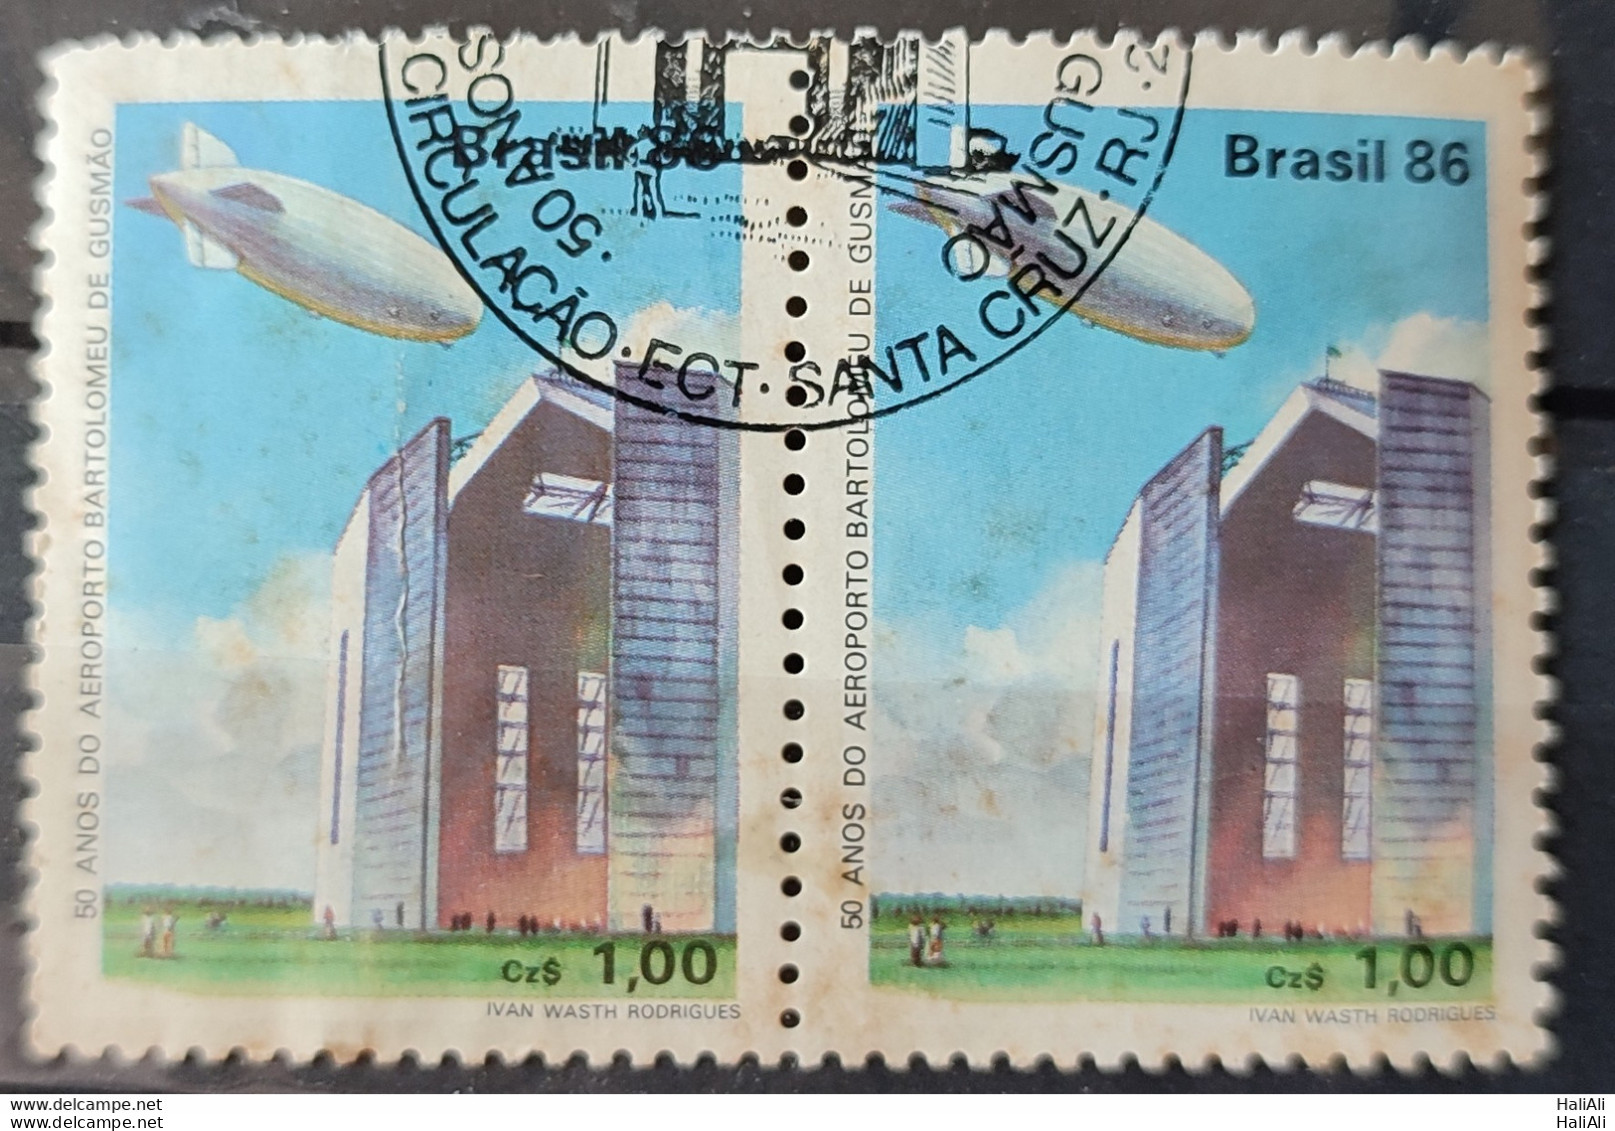 C 1541 Brazil Stamp 50 Years Airport Bartolomeu De Gusmao Balloon Hangar 1986 Dupla Circulated 2.jpg - Usati